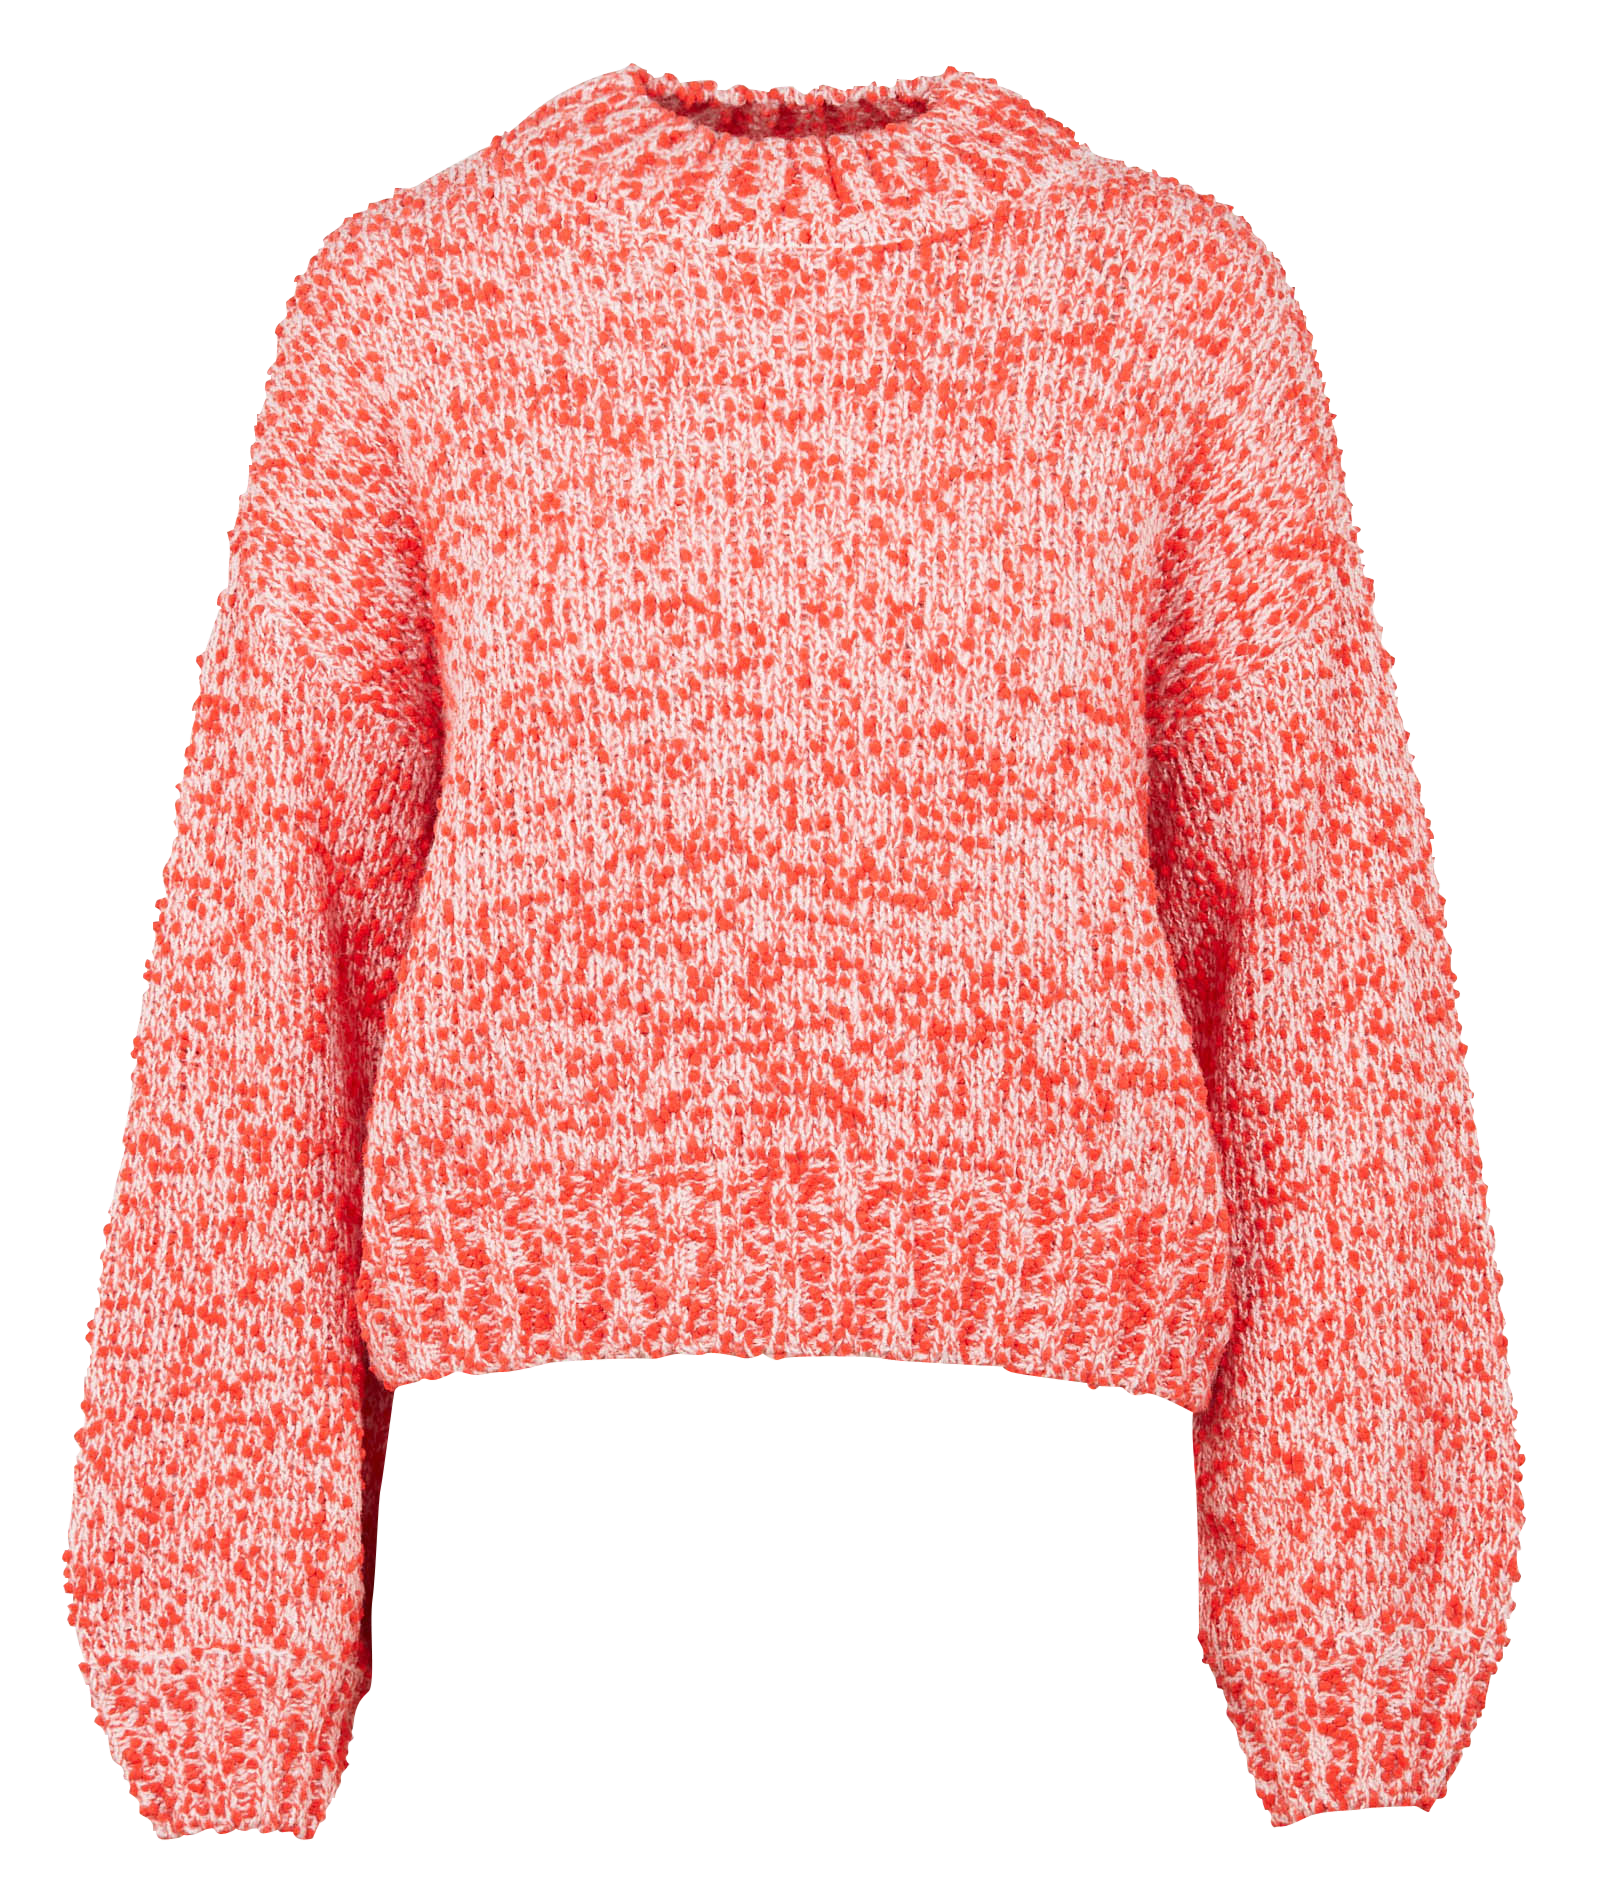 Scotch & Soda Pointelle Stitch Knit in Organic Cotton Viscose Blend Sweater Femme